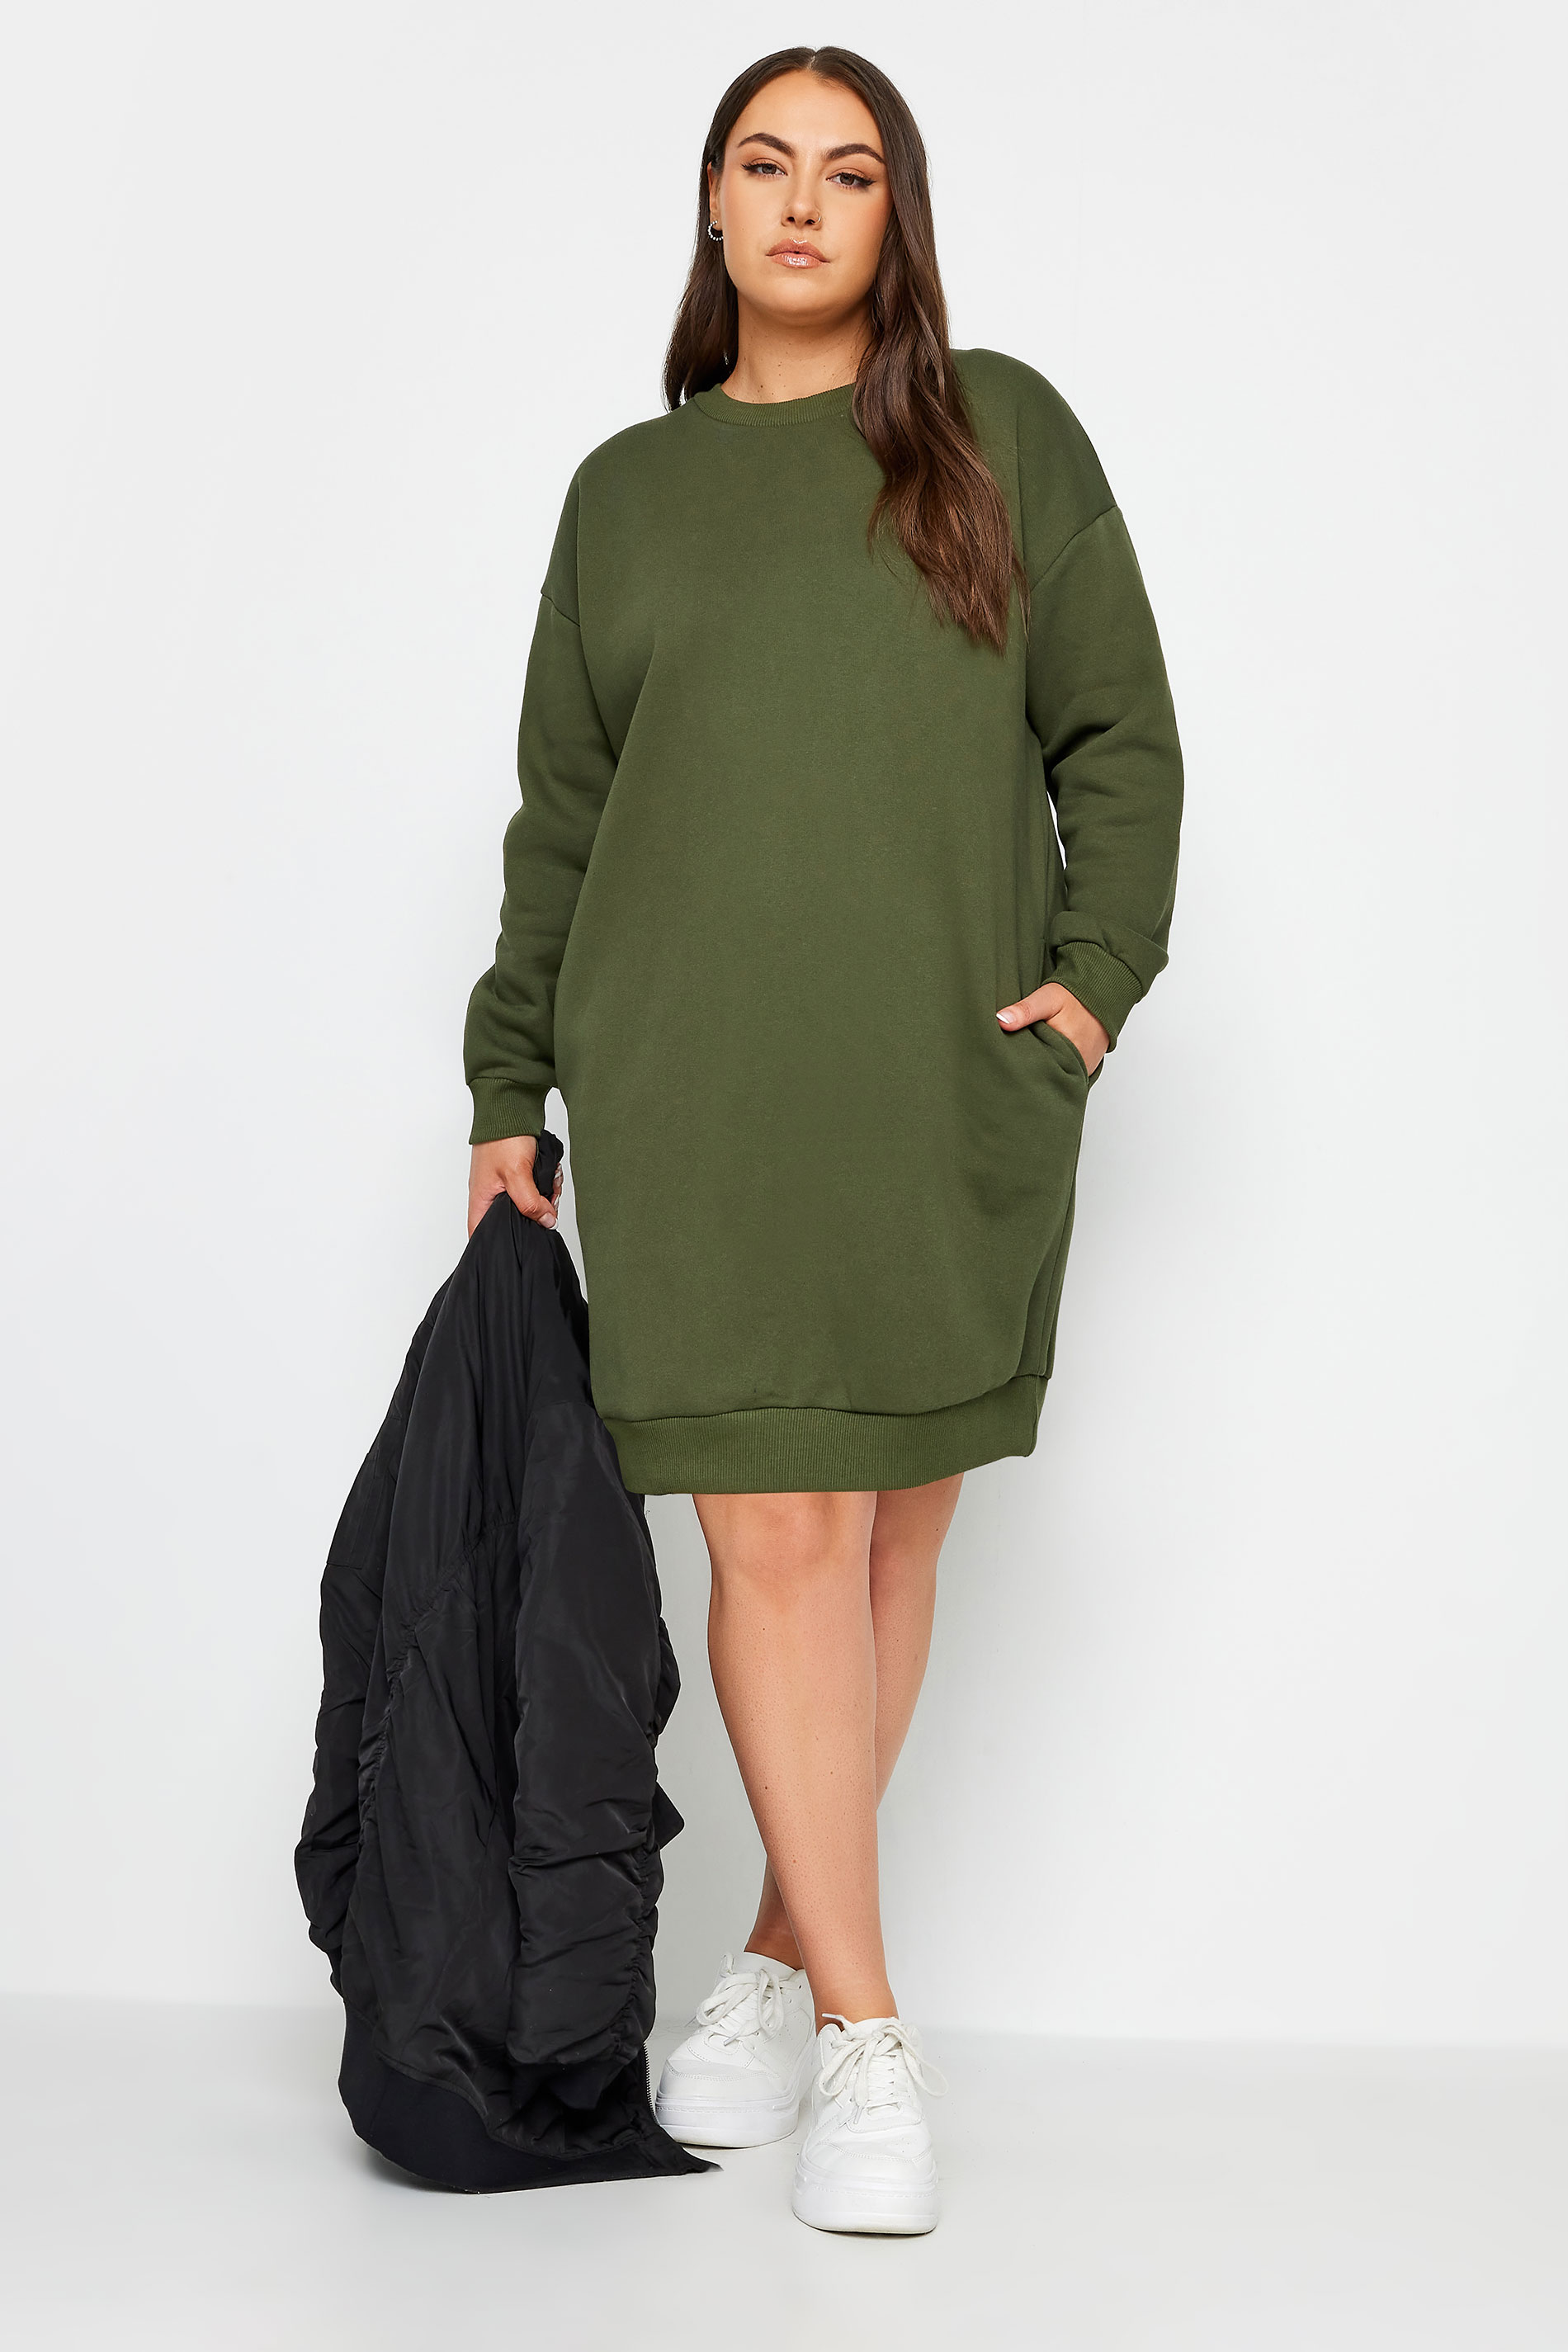 YOURS Plus Size Khaki Green Sweatshirt Dress | Yours Clothing 1